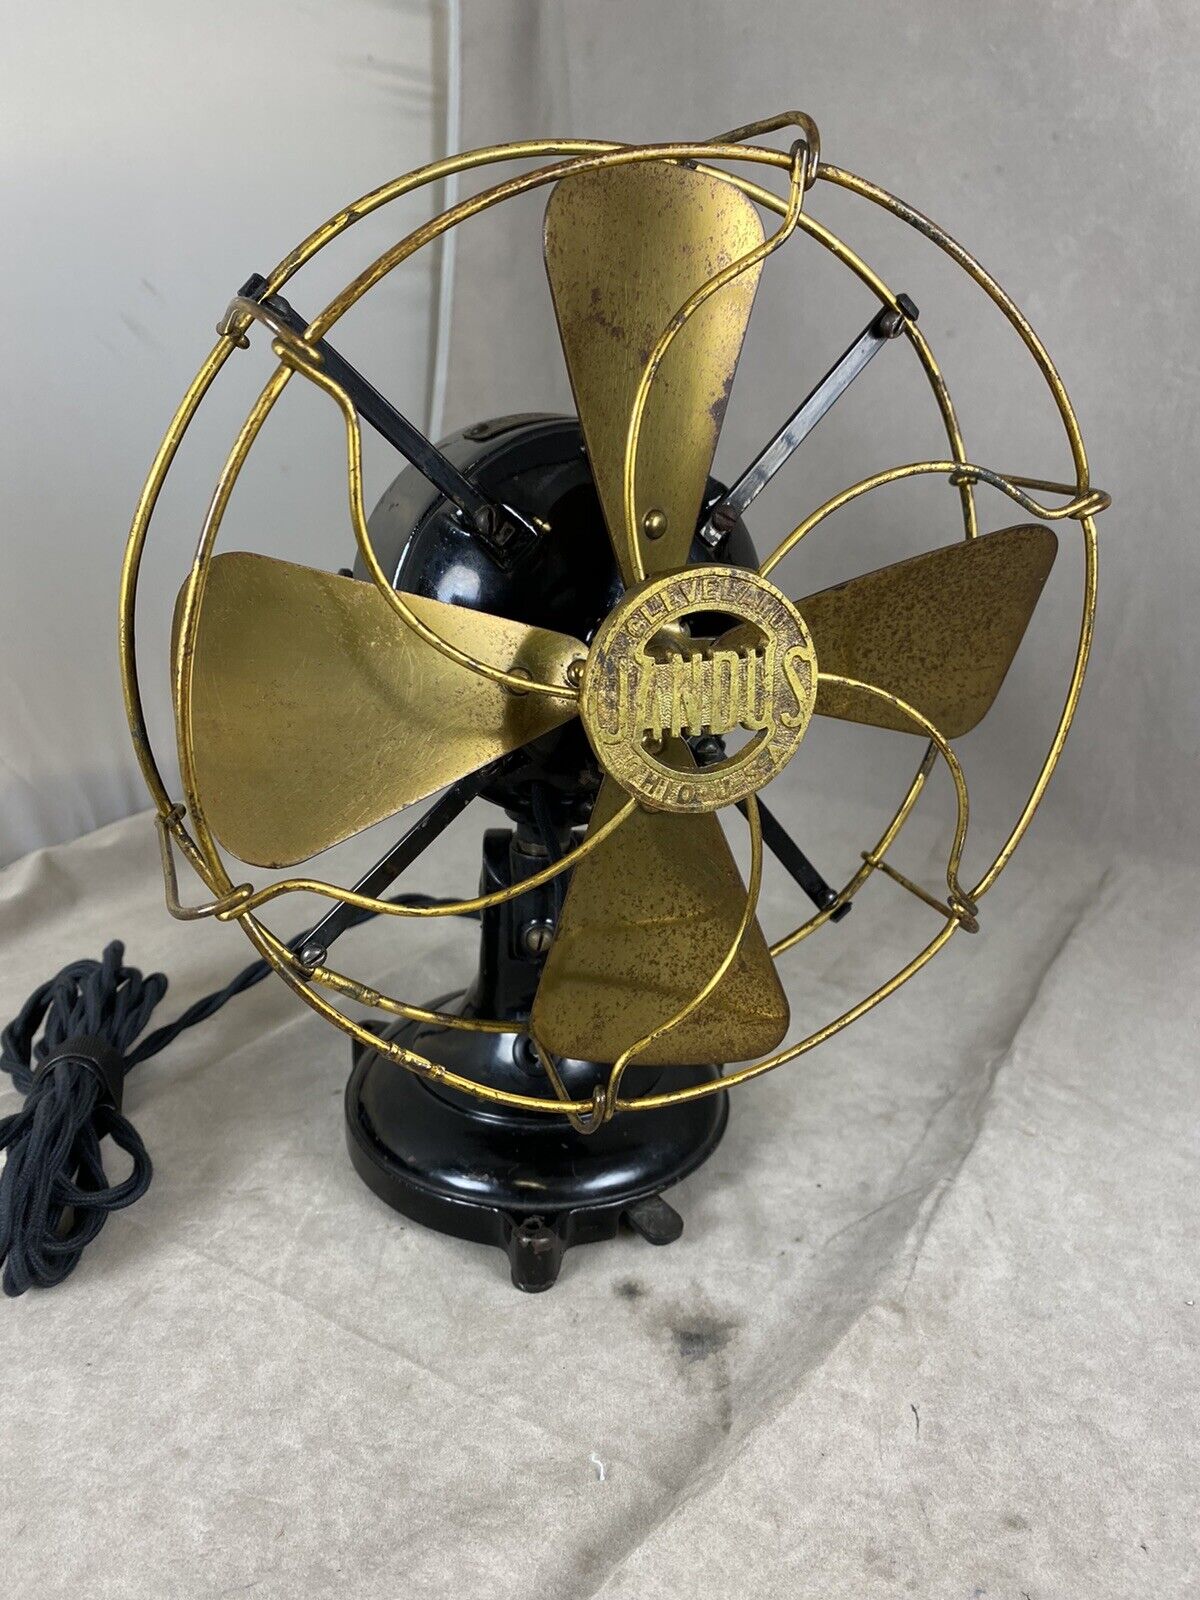 Very Rare And Hard To find 8” Jandus Mechanical Oscillator Fan